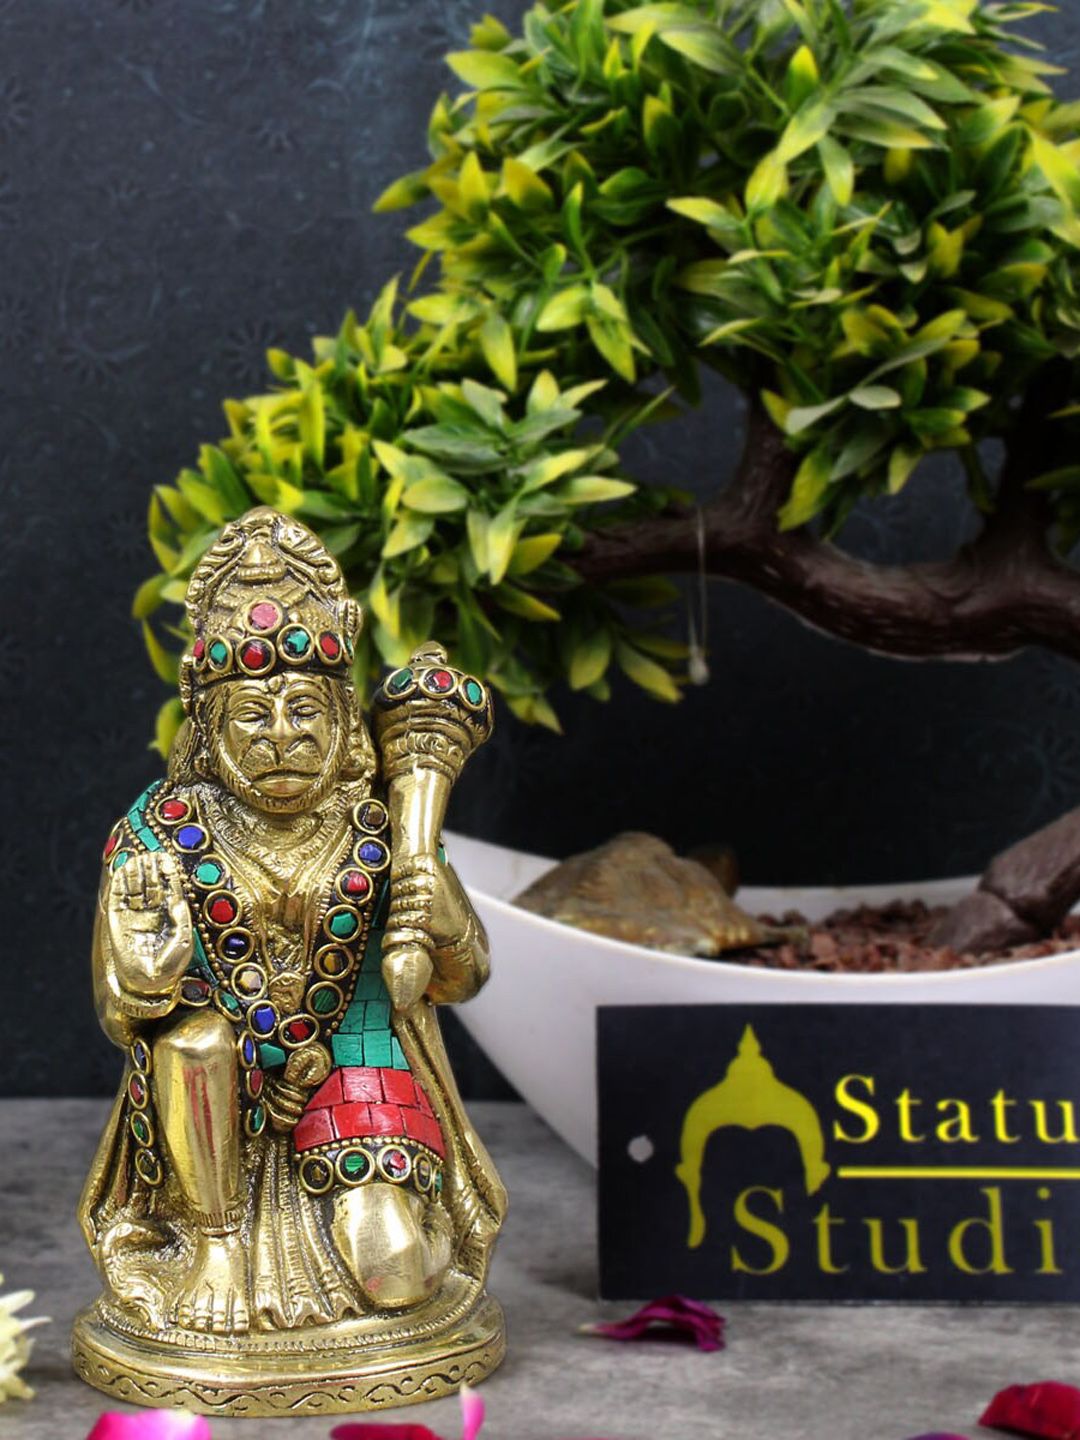 StatueStudio Copper Hanuman Figurine Showpieces Price in India